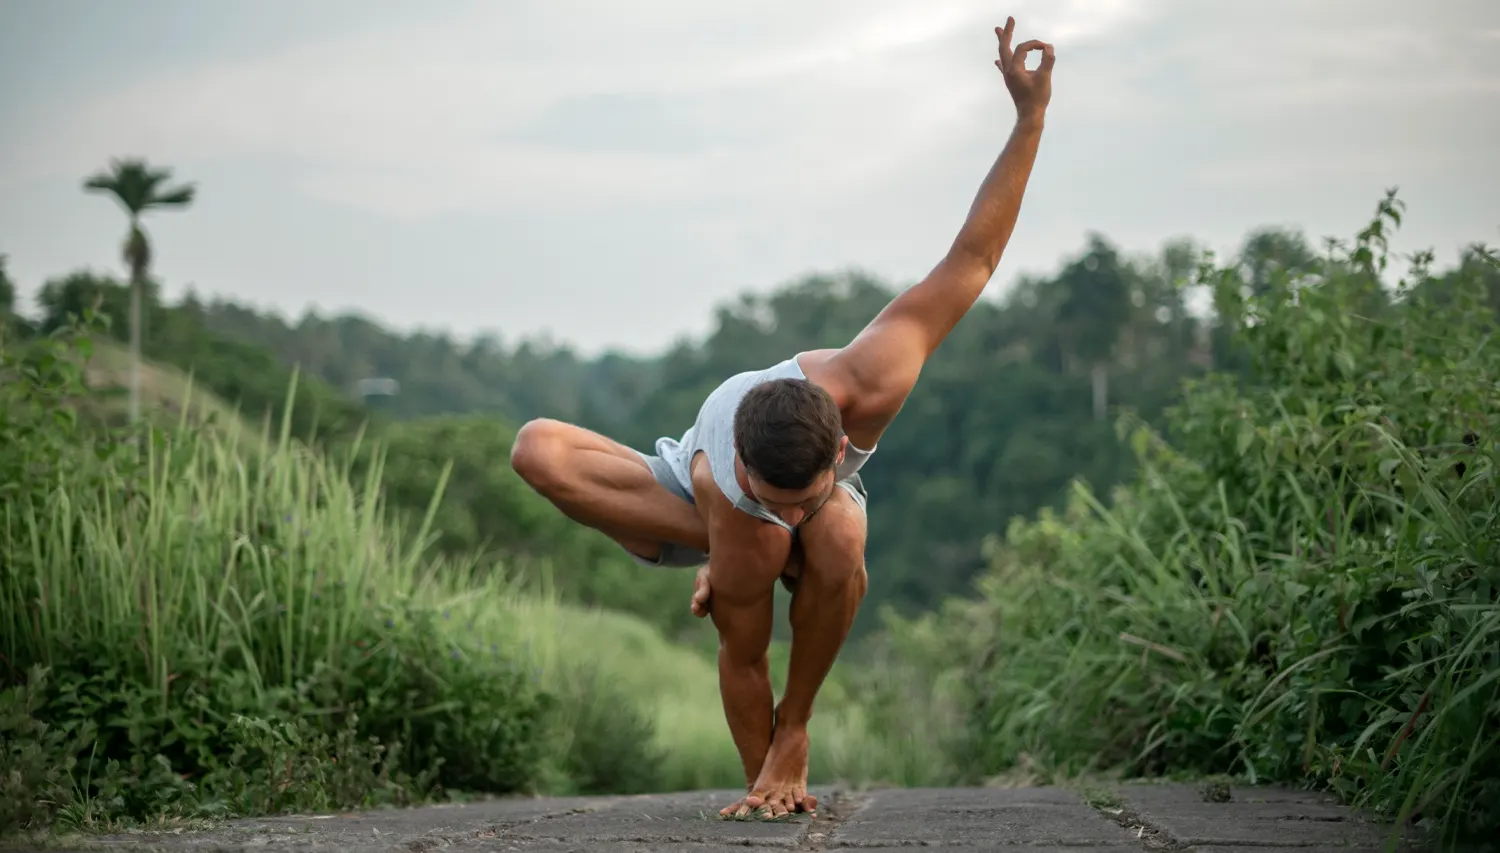 YOGISAN 12 % Yogalehrer Rabatt - JETZT registrieren!